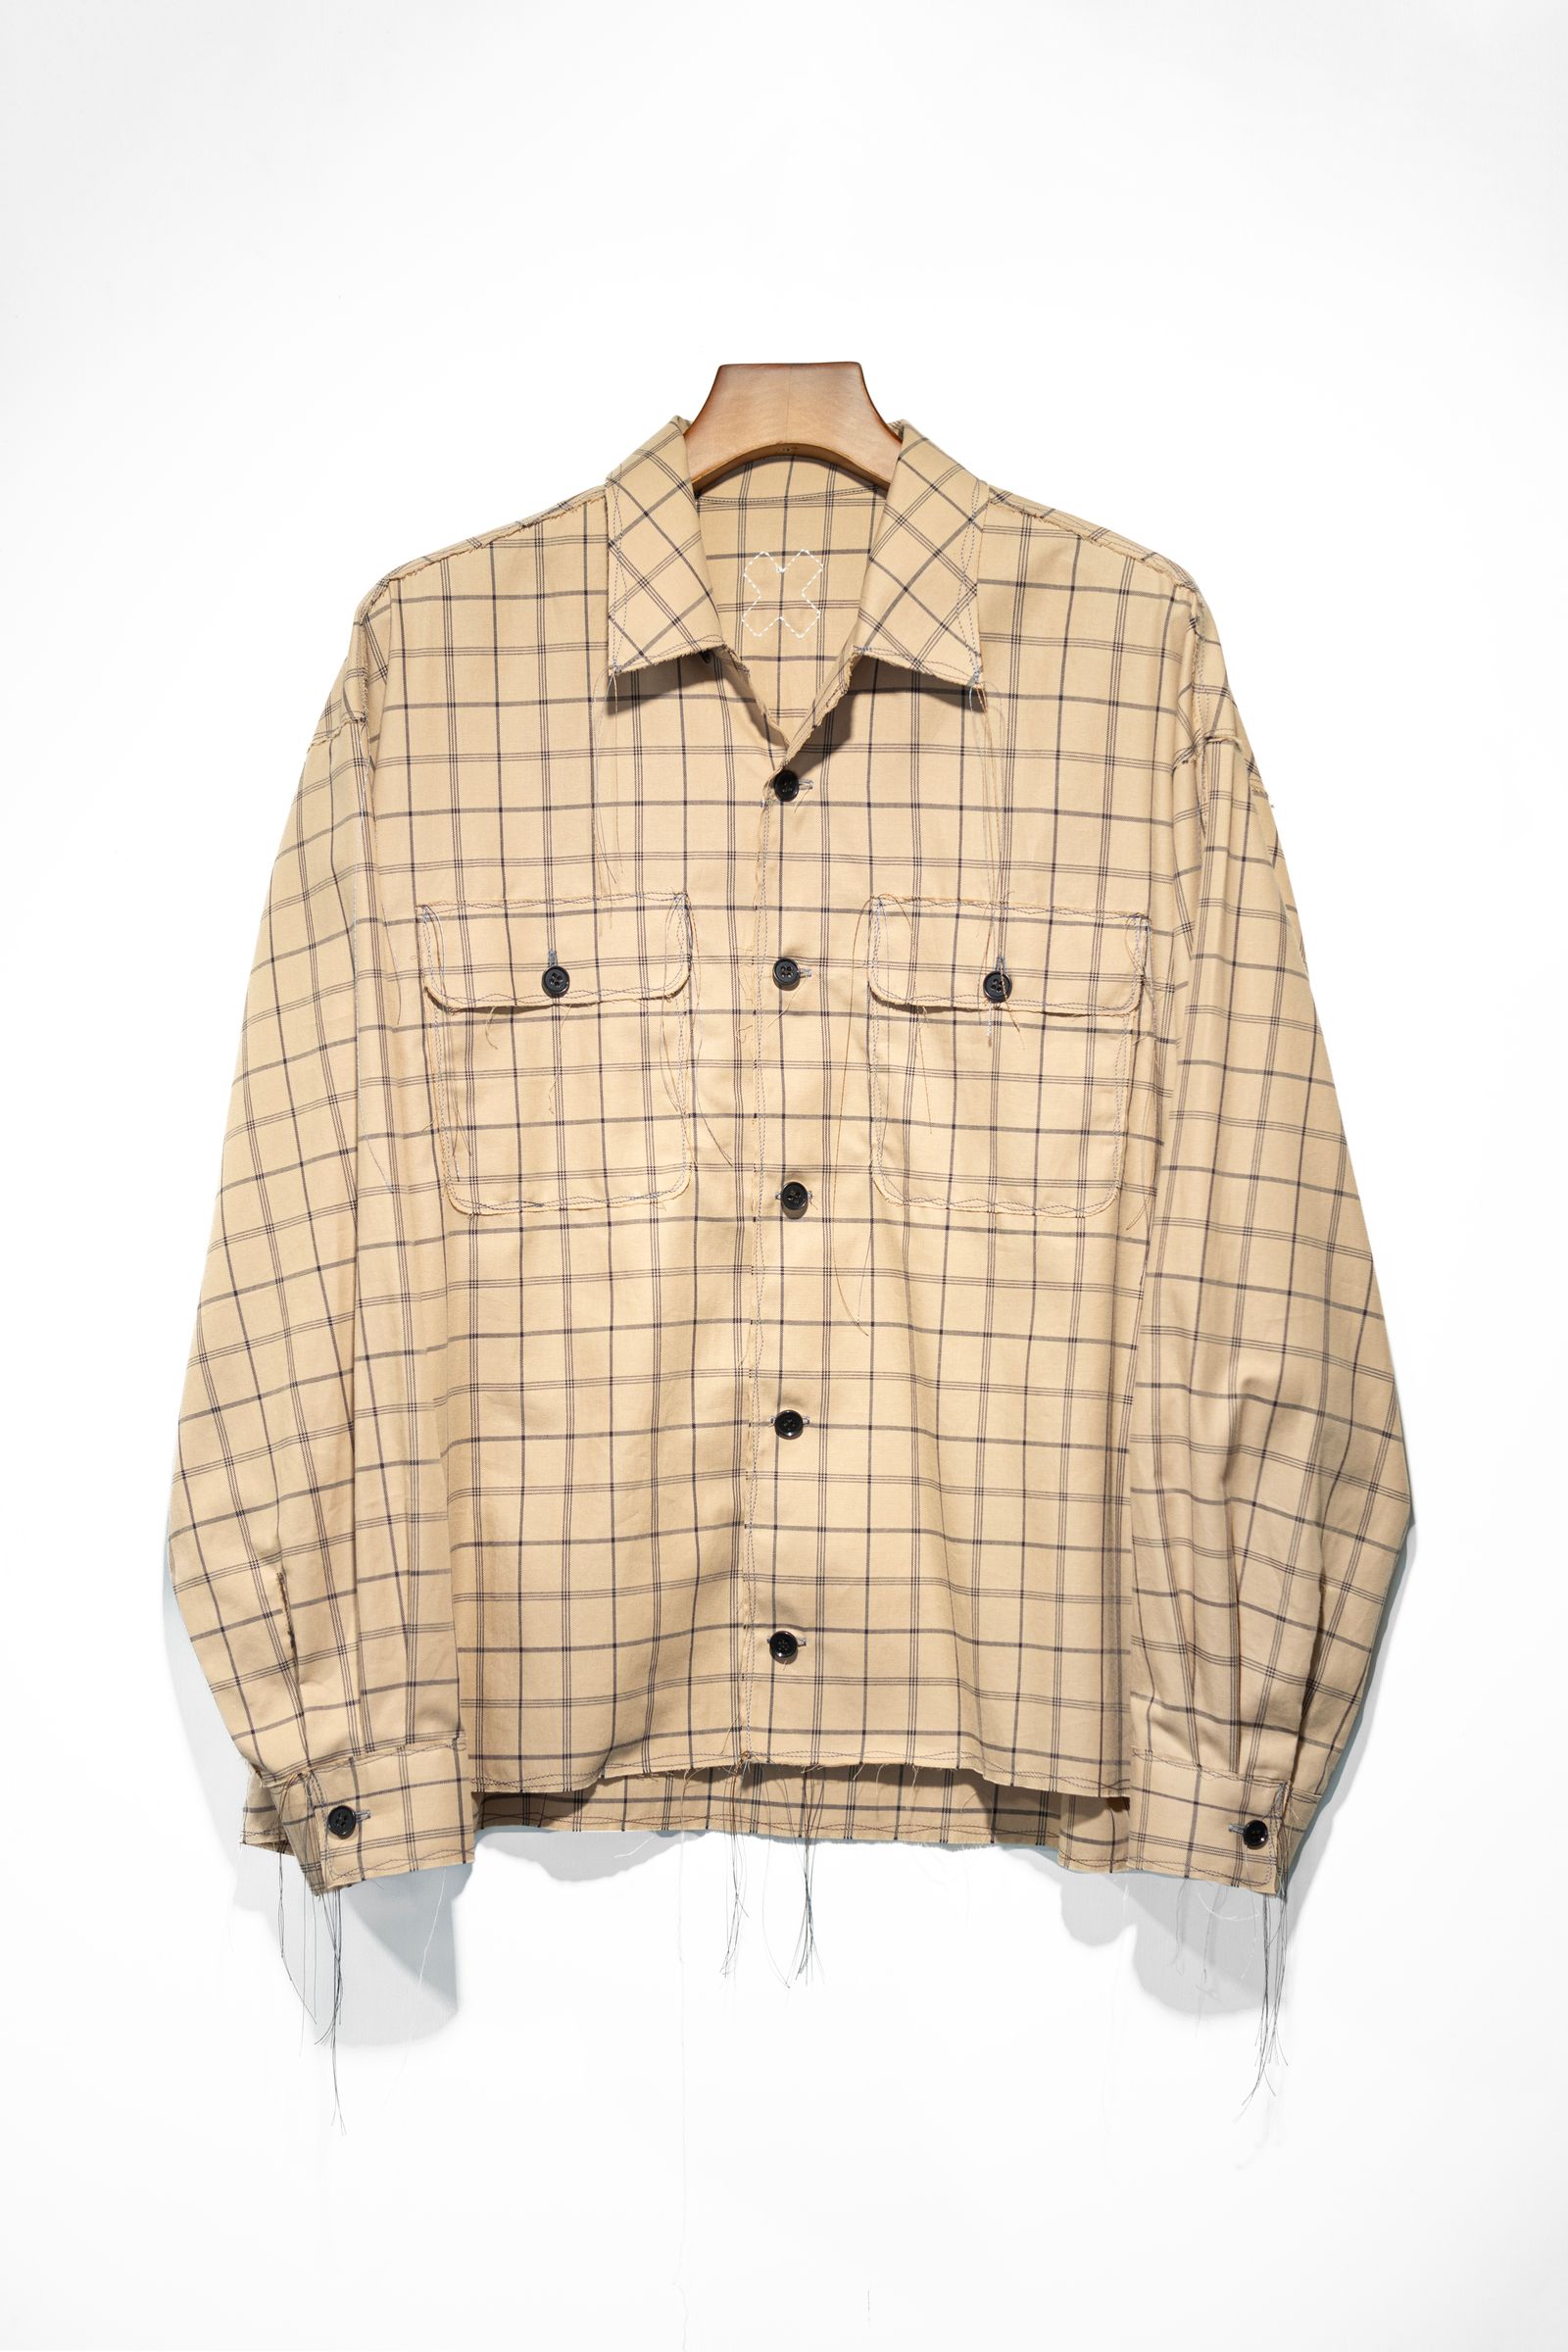 LQUARTET - 60s collar shirts / beige | Retikle Online Store